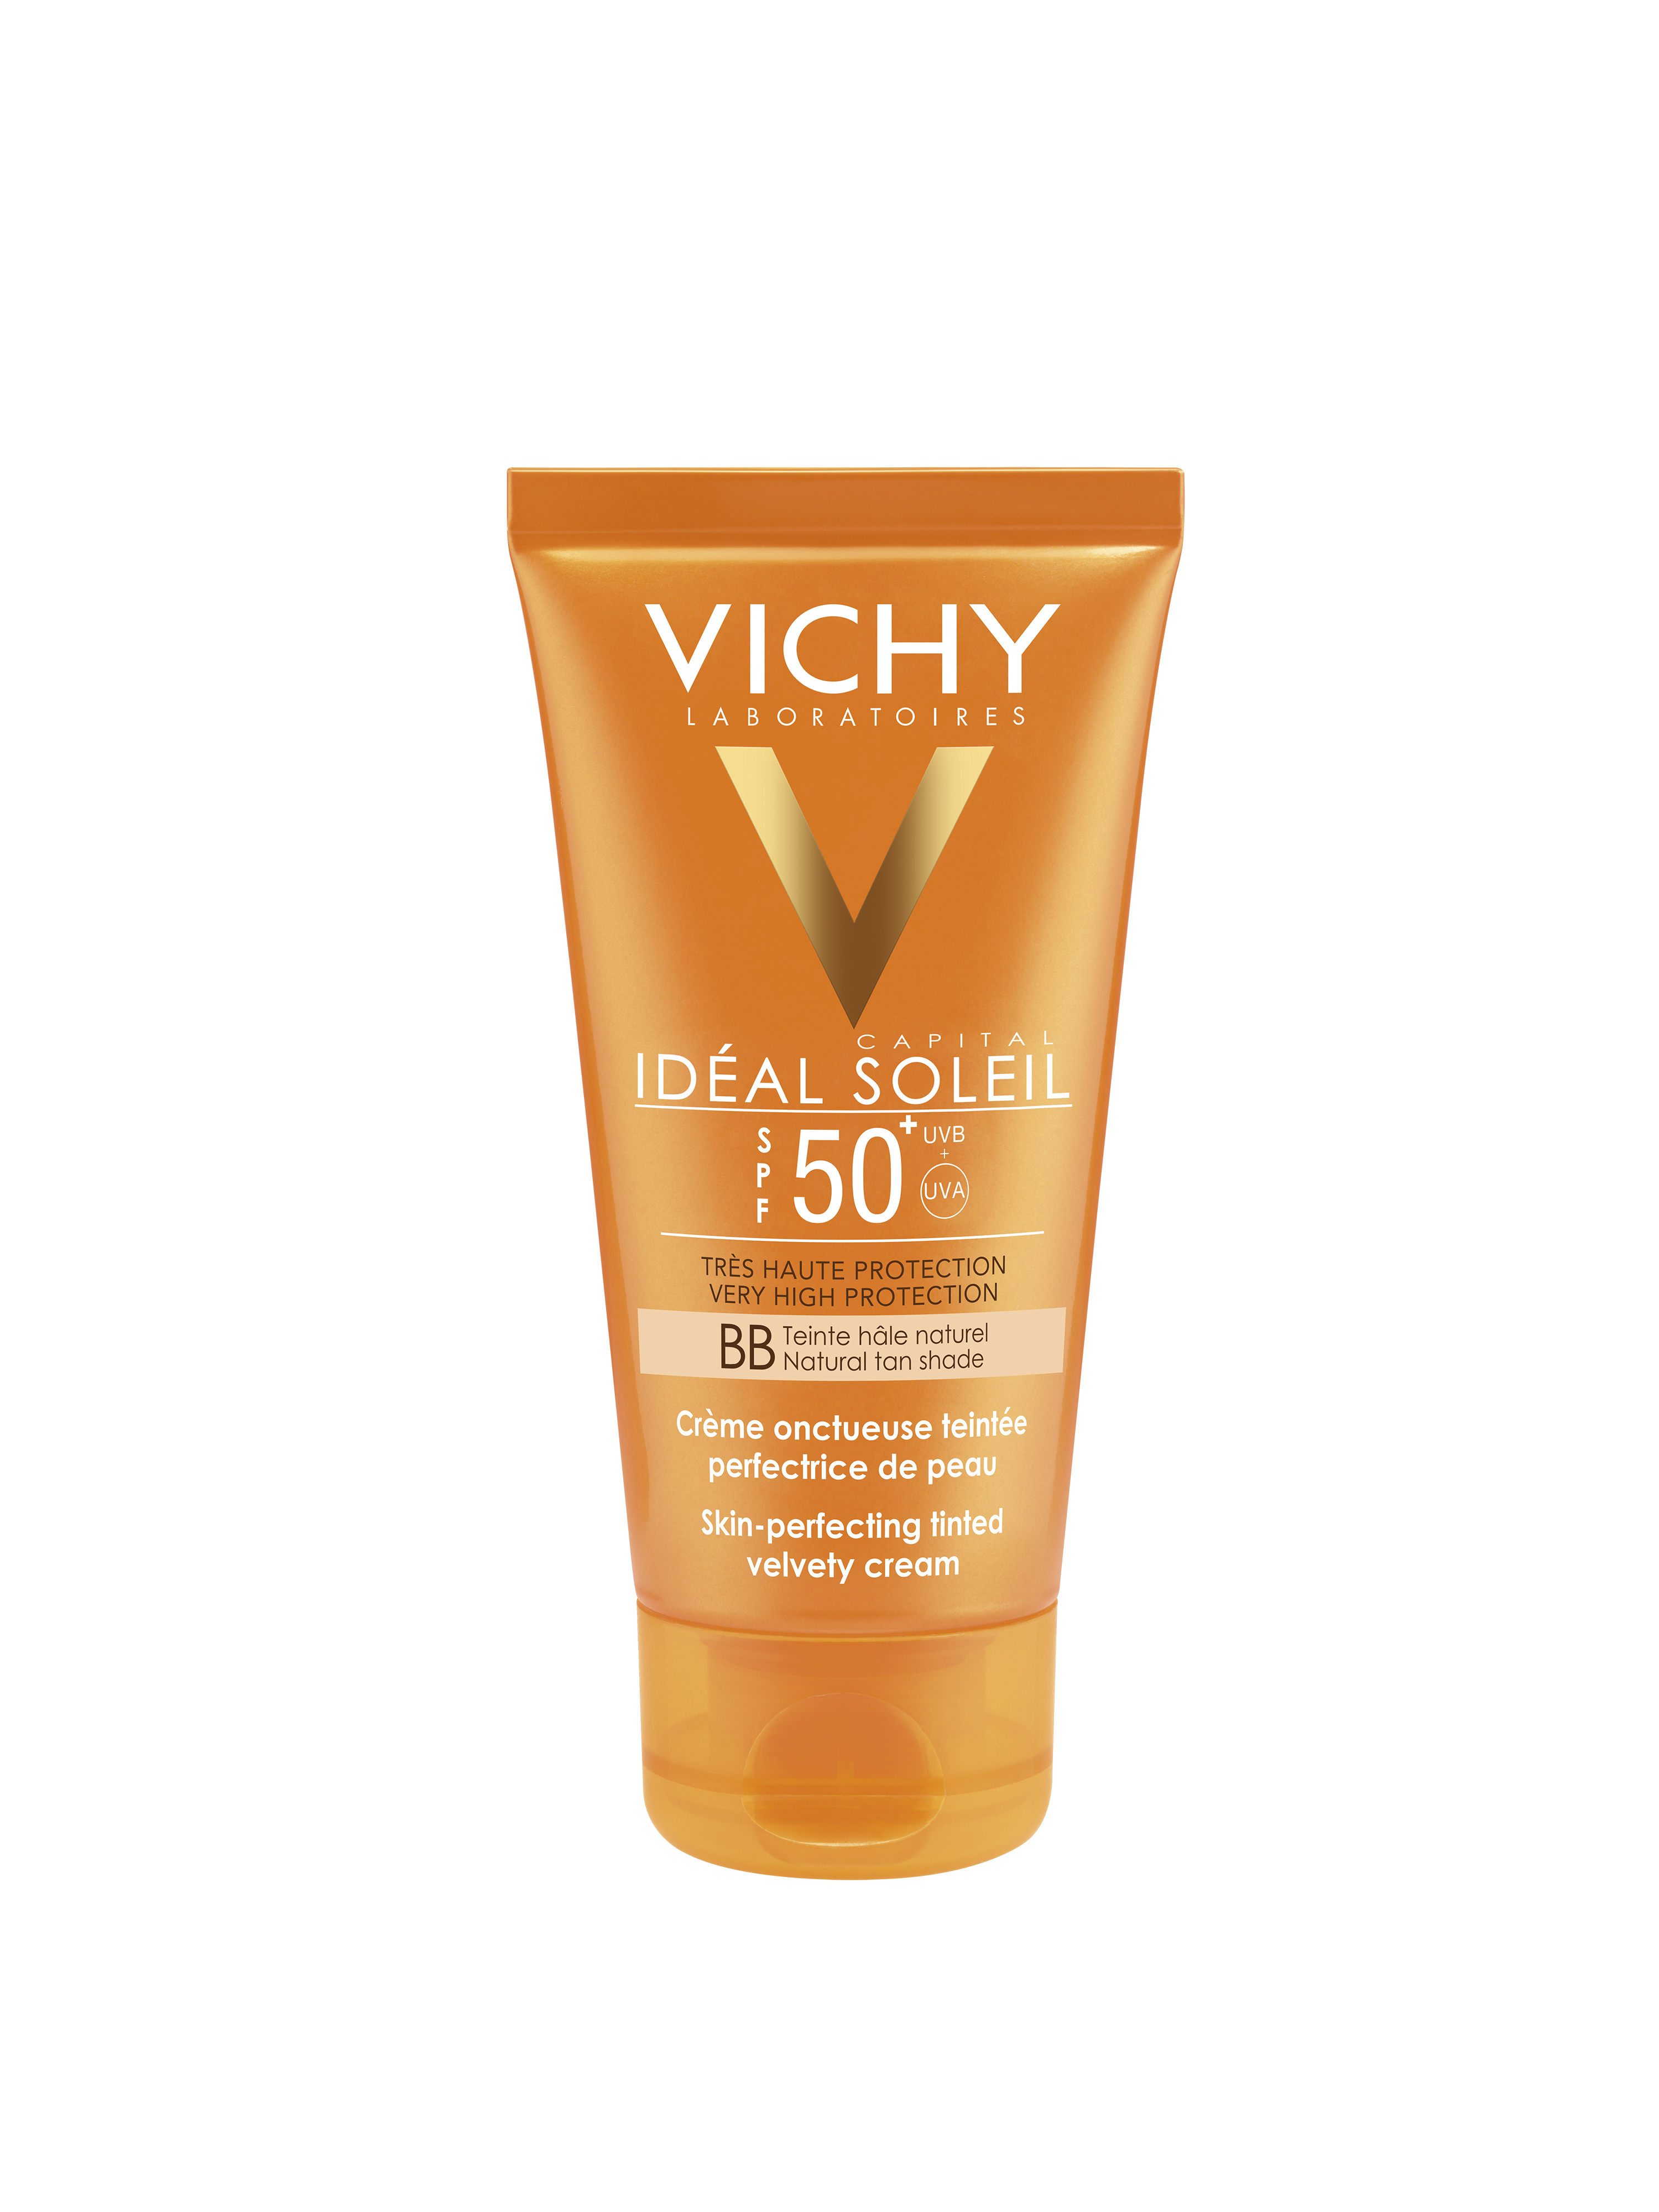 Vichy Ideal Soleil Velvet Creme Teinte BB SPF50+ 50Ml